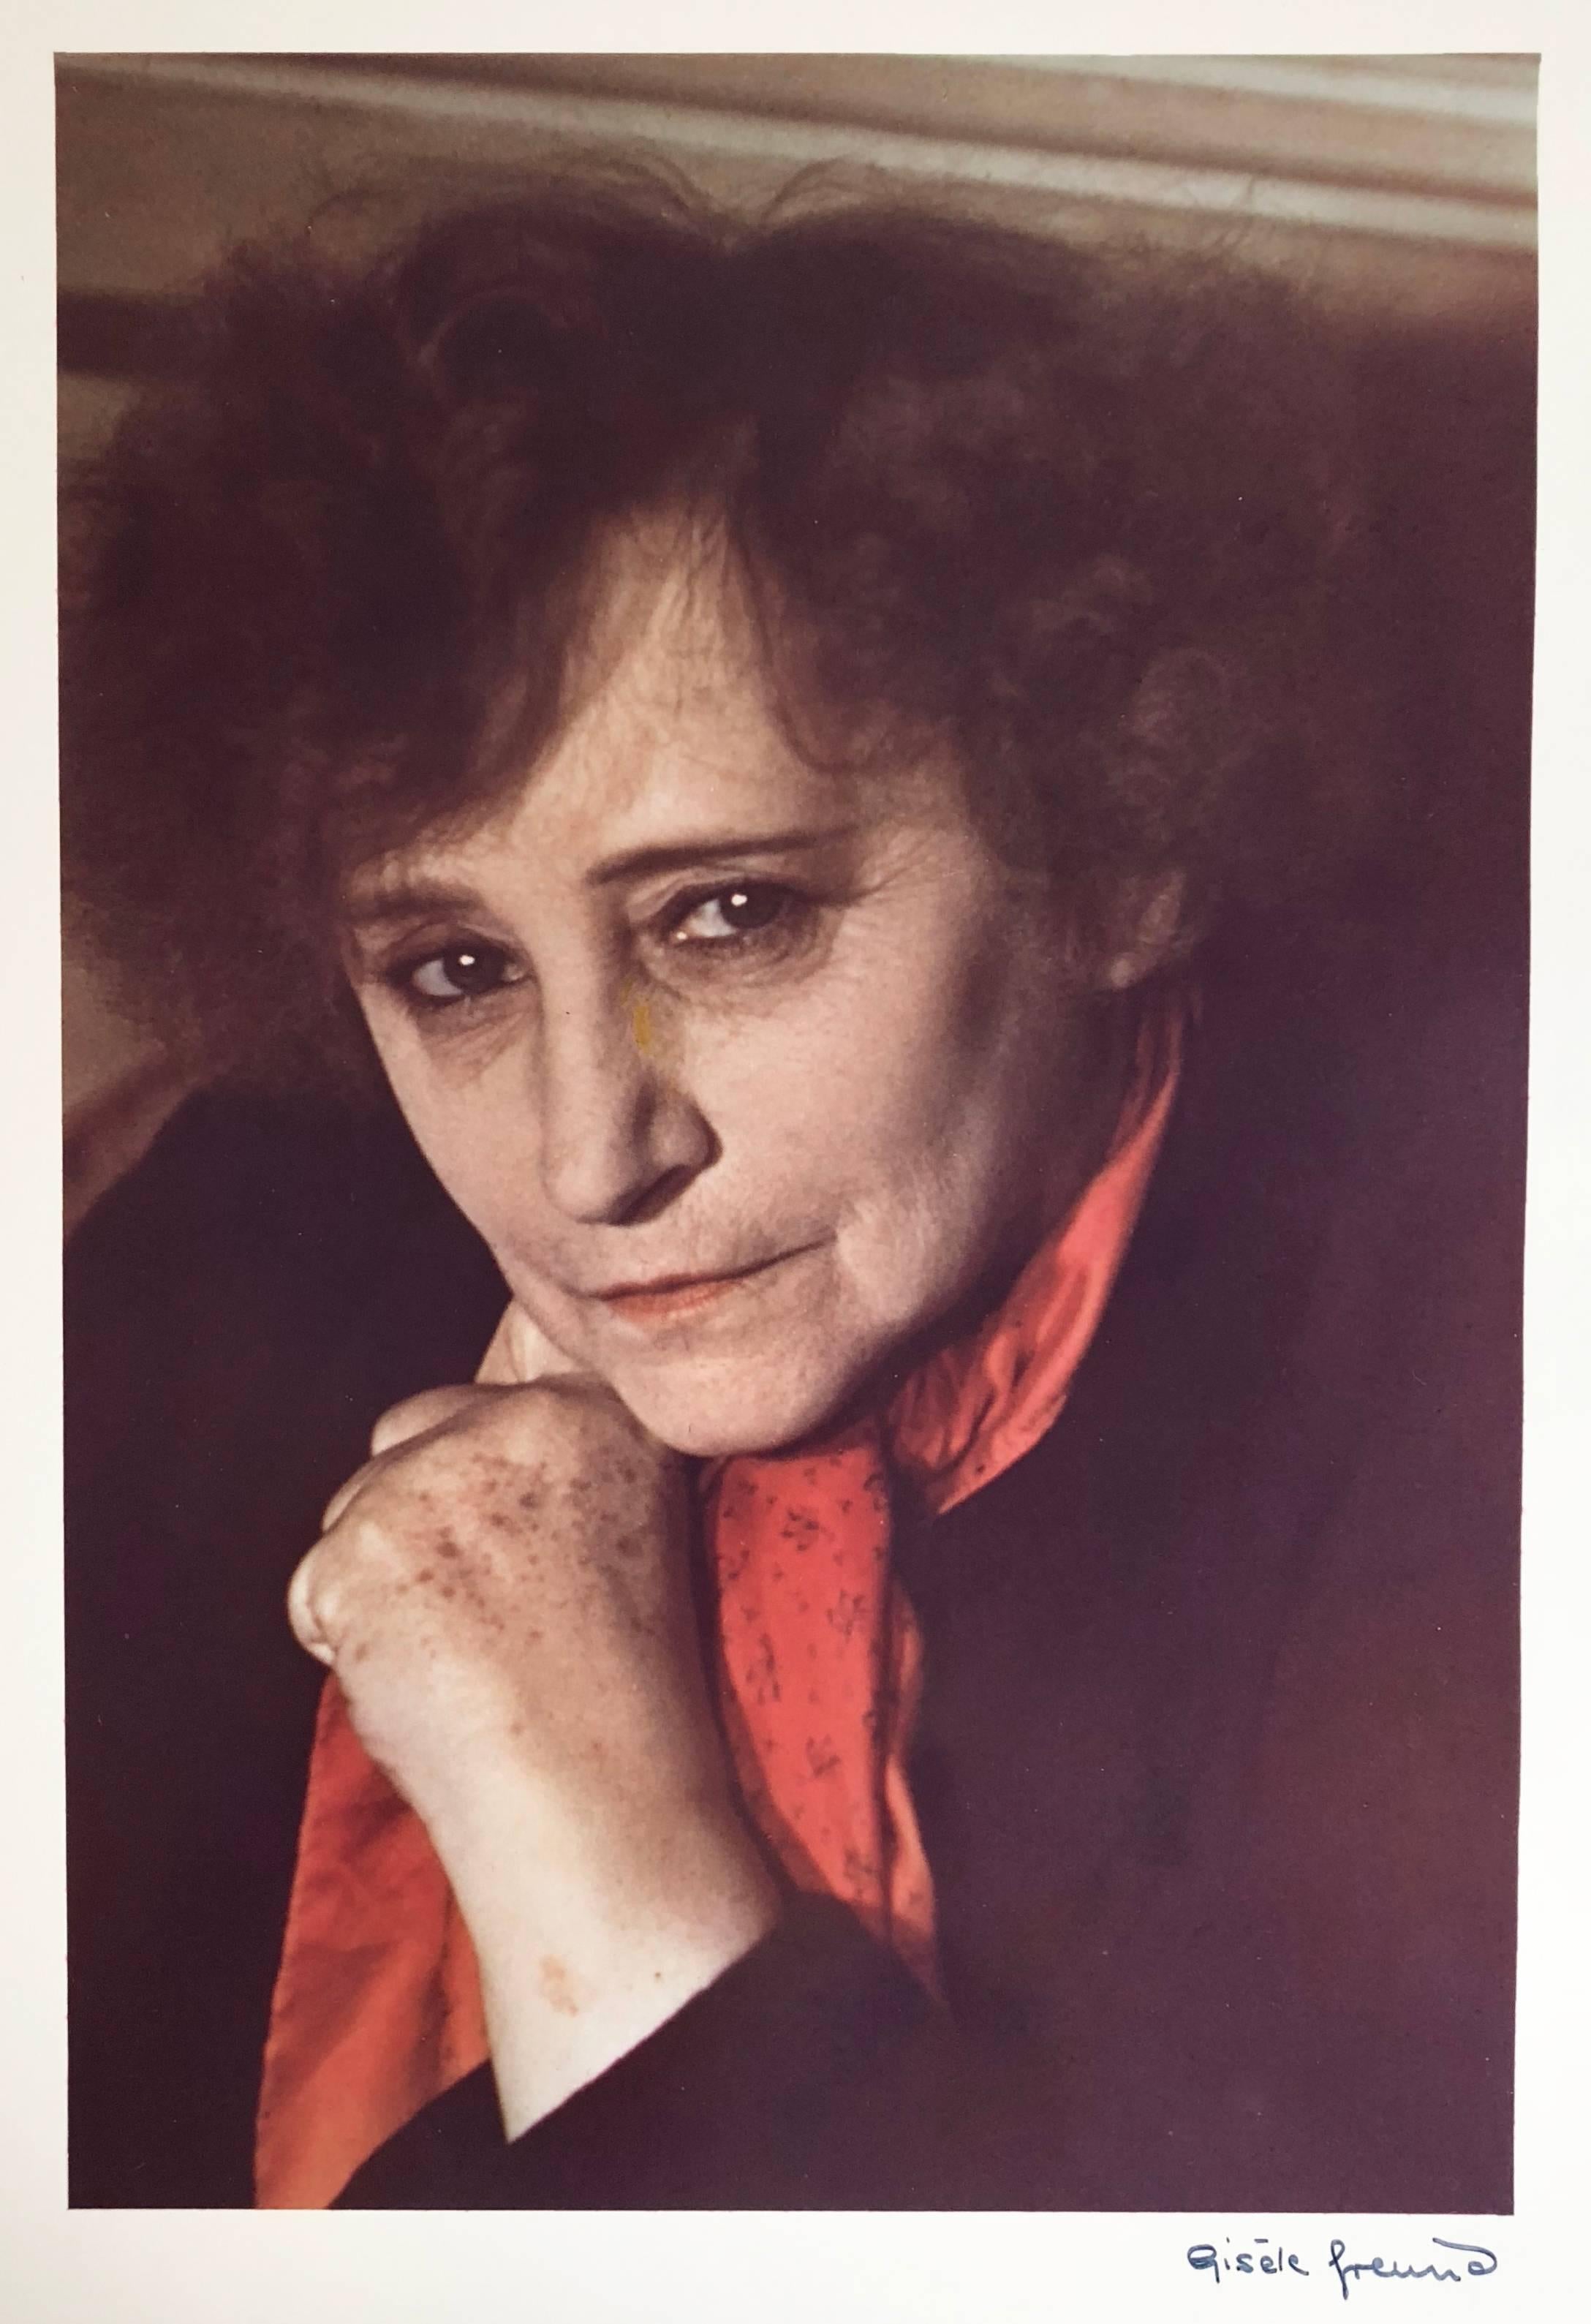 Colette, France, Author Photograph of Legendary French Woman Writer 1930s Paris